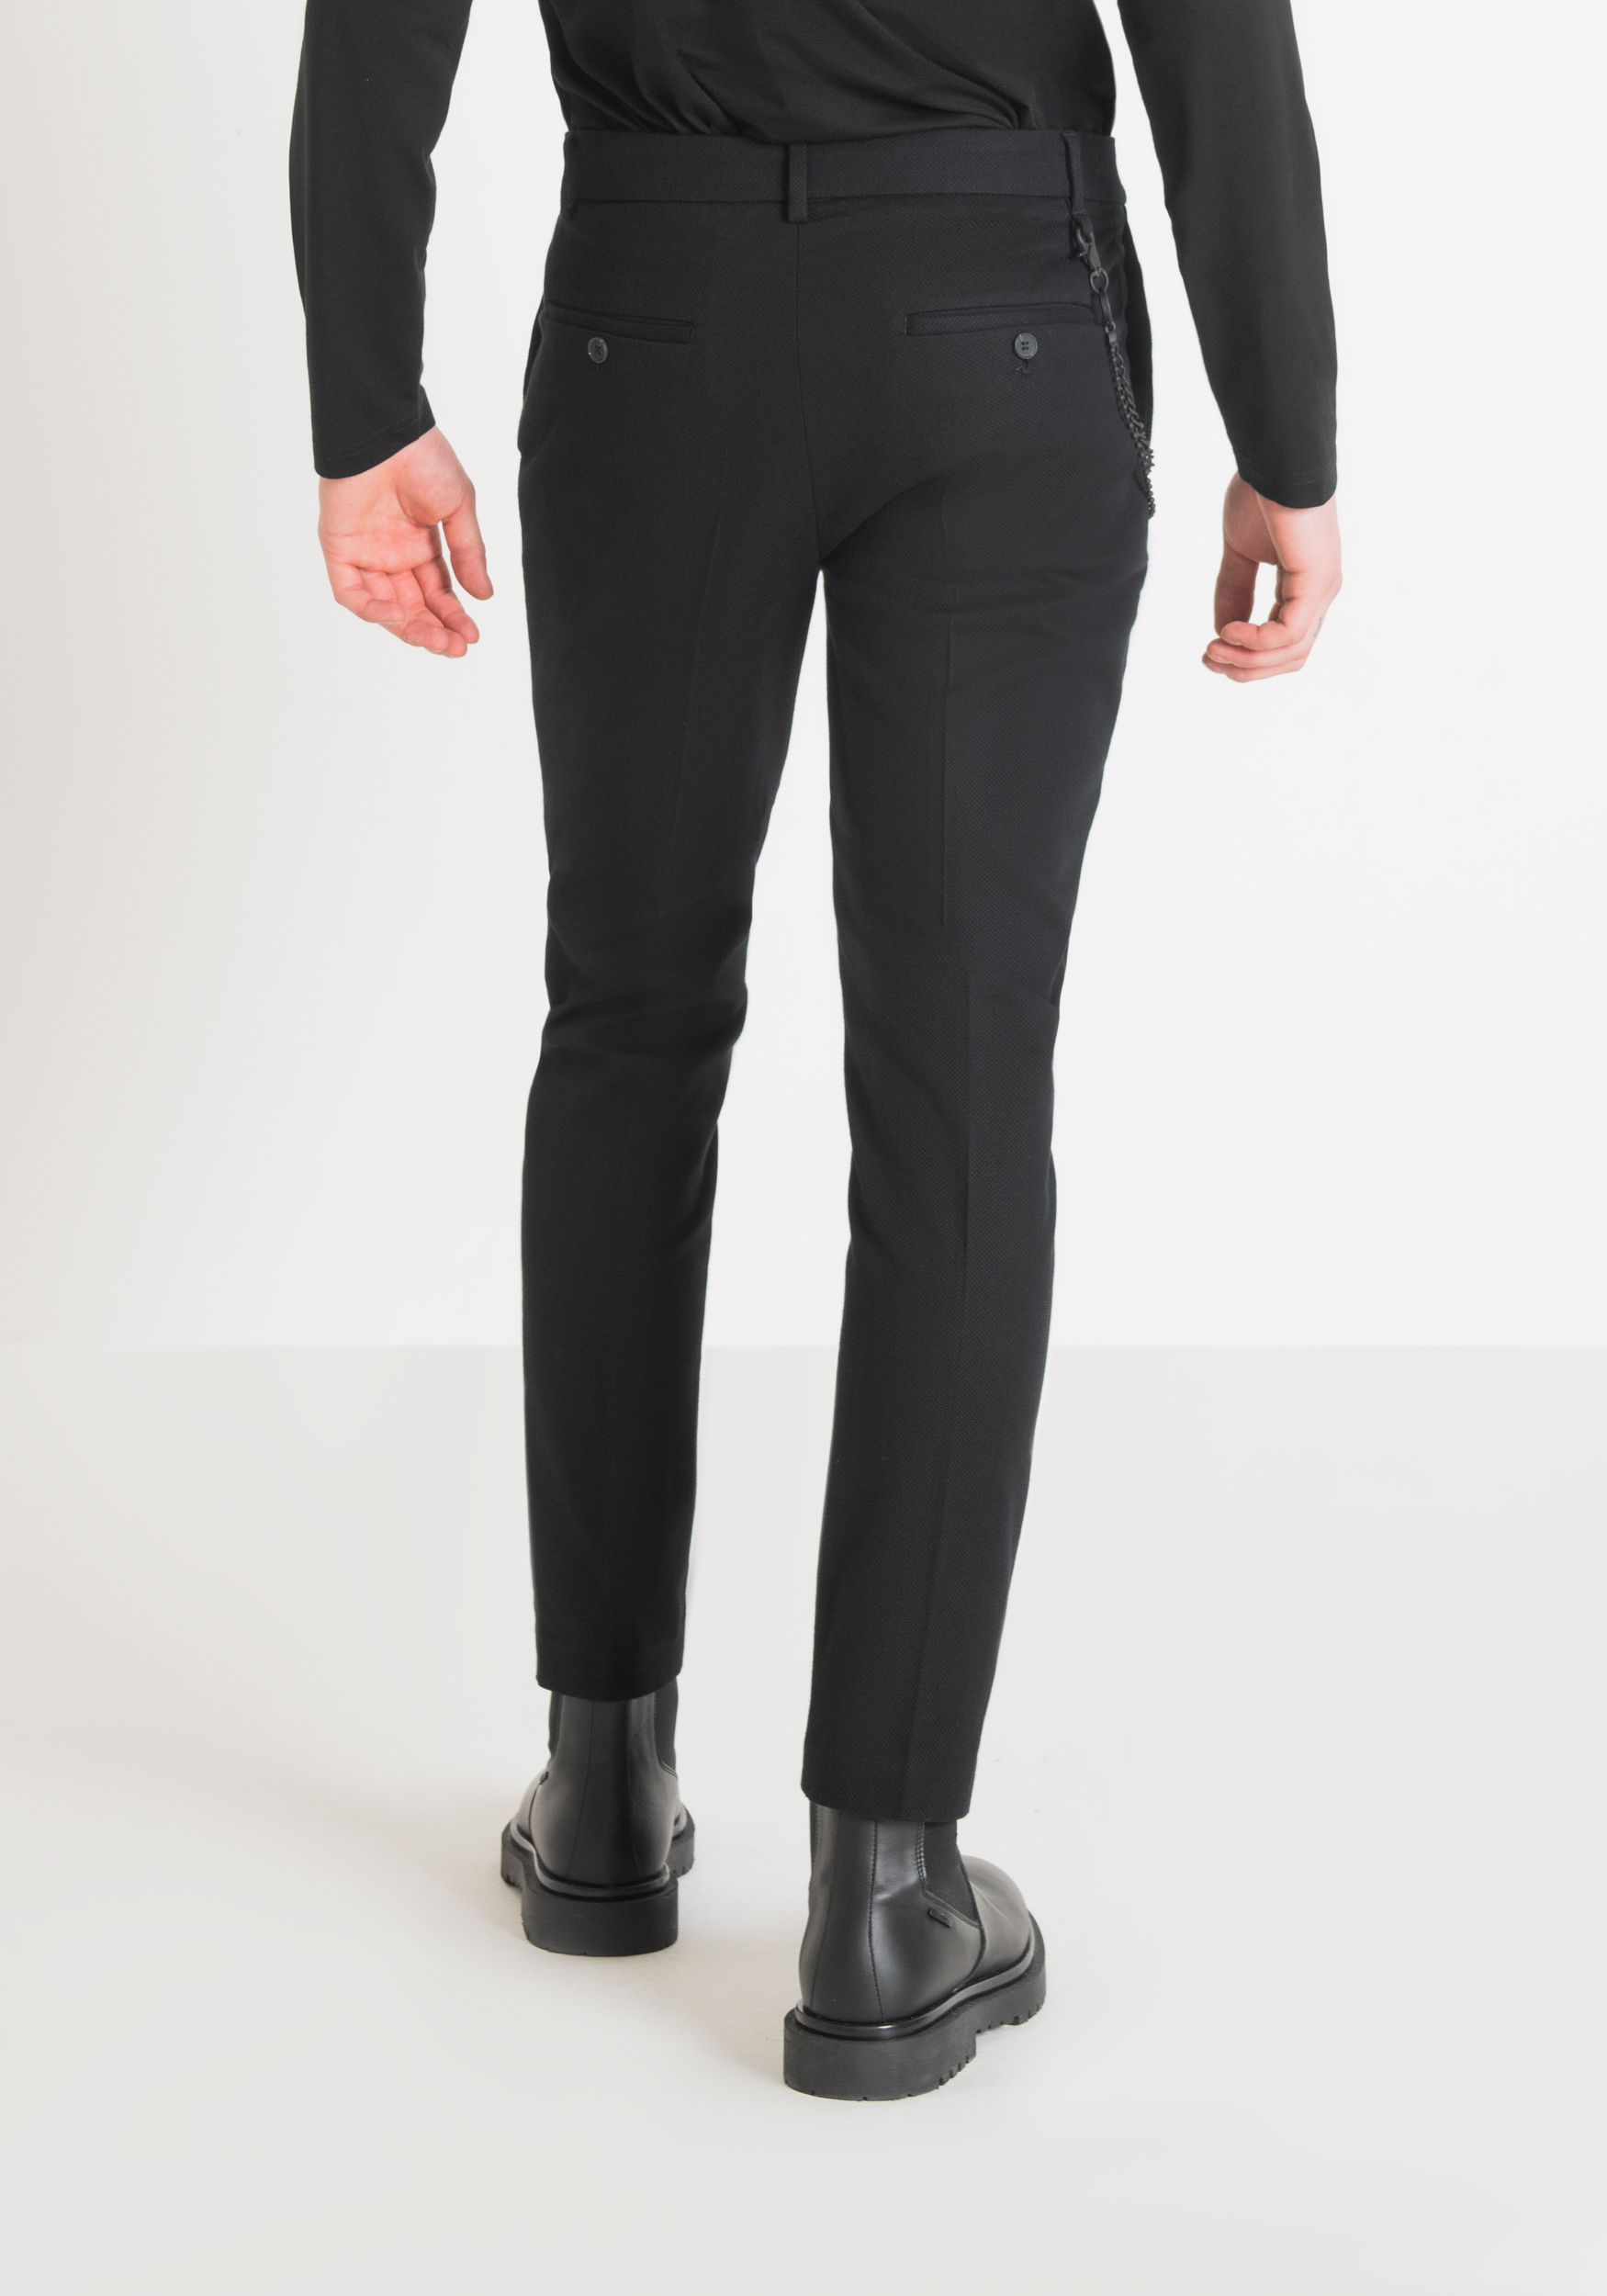 Antony Morato Pantalon Carrot Fit Jagger En Coton Elastique Armure Noir | Homme Pantalons